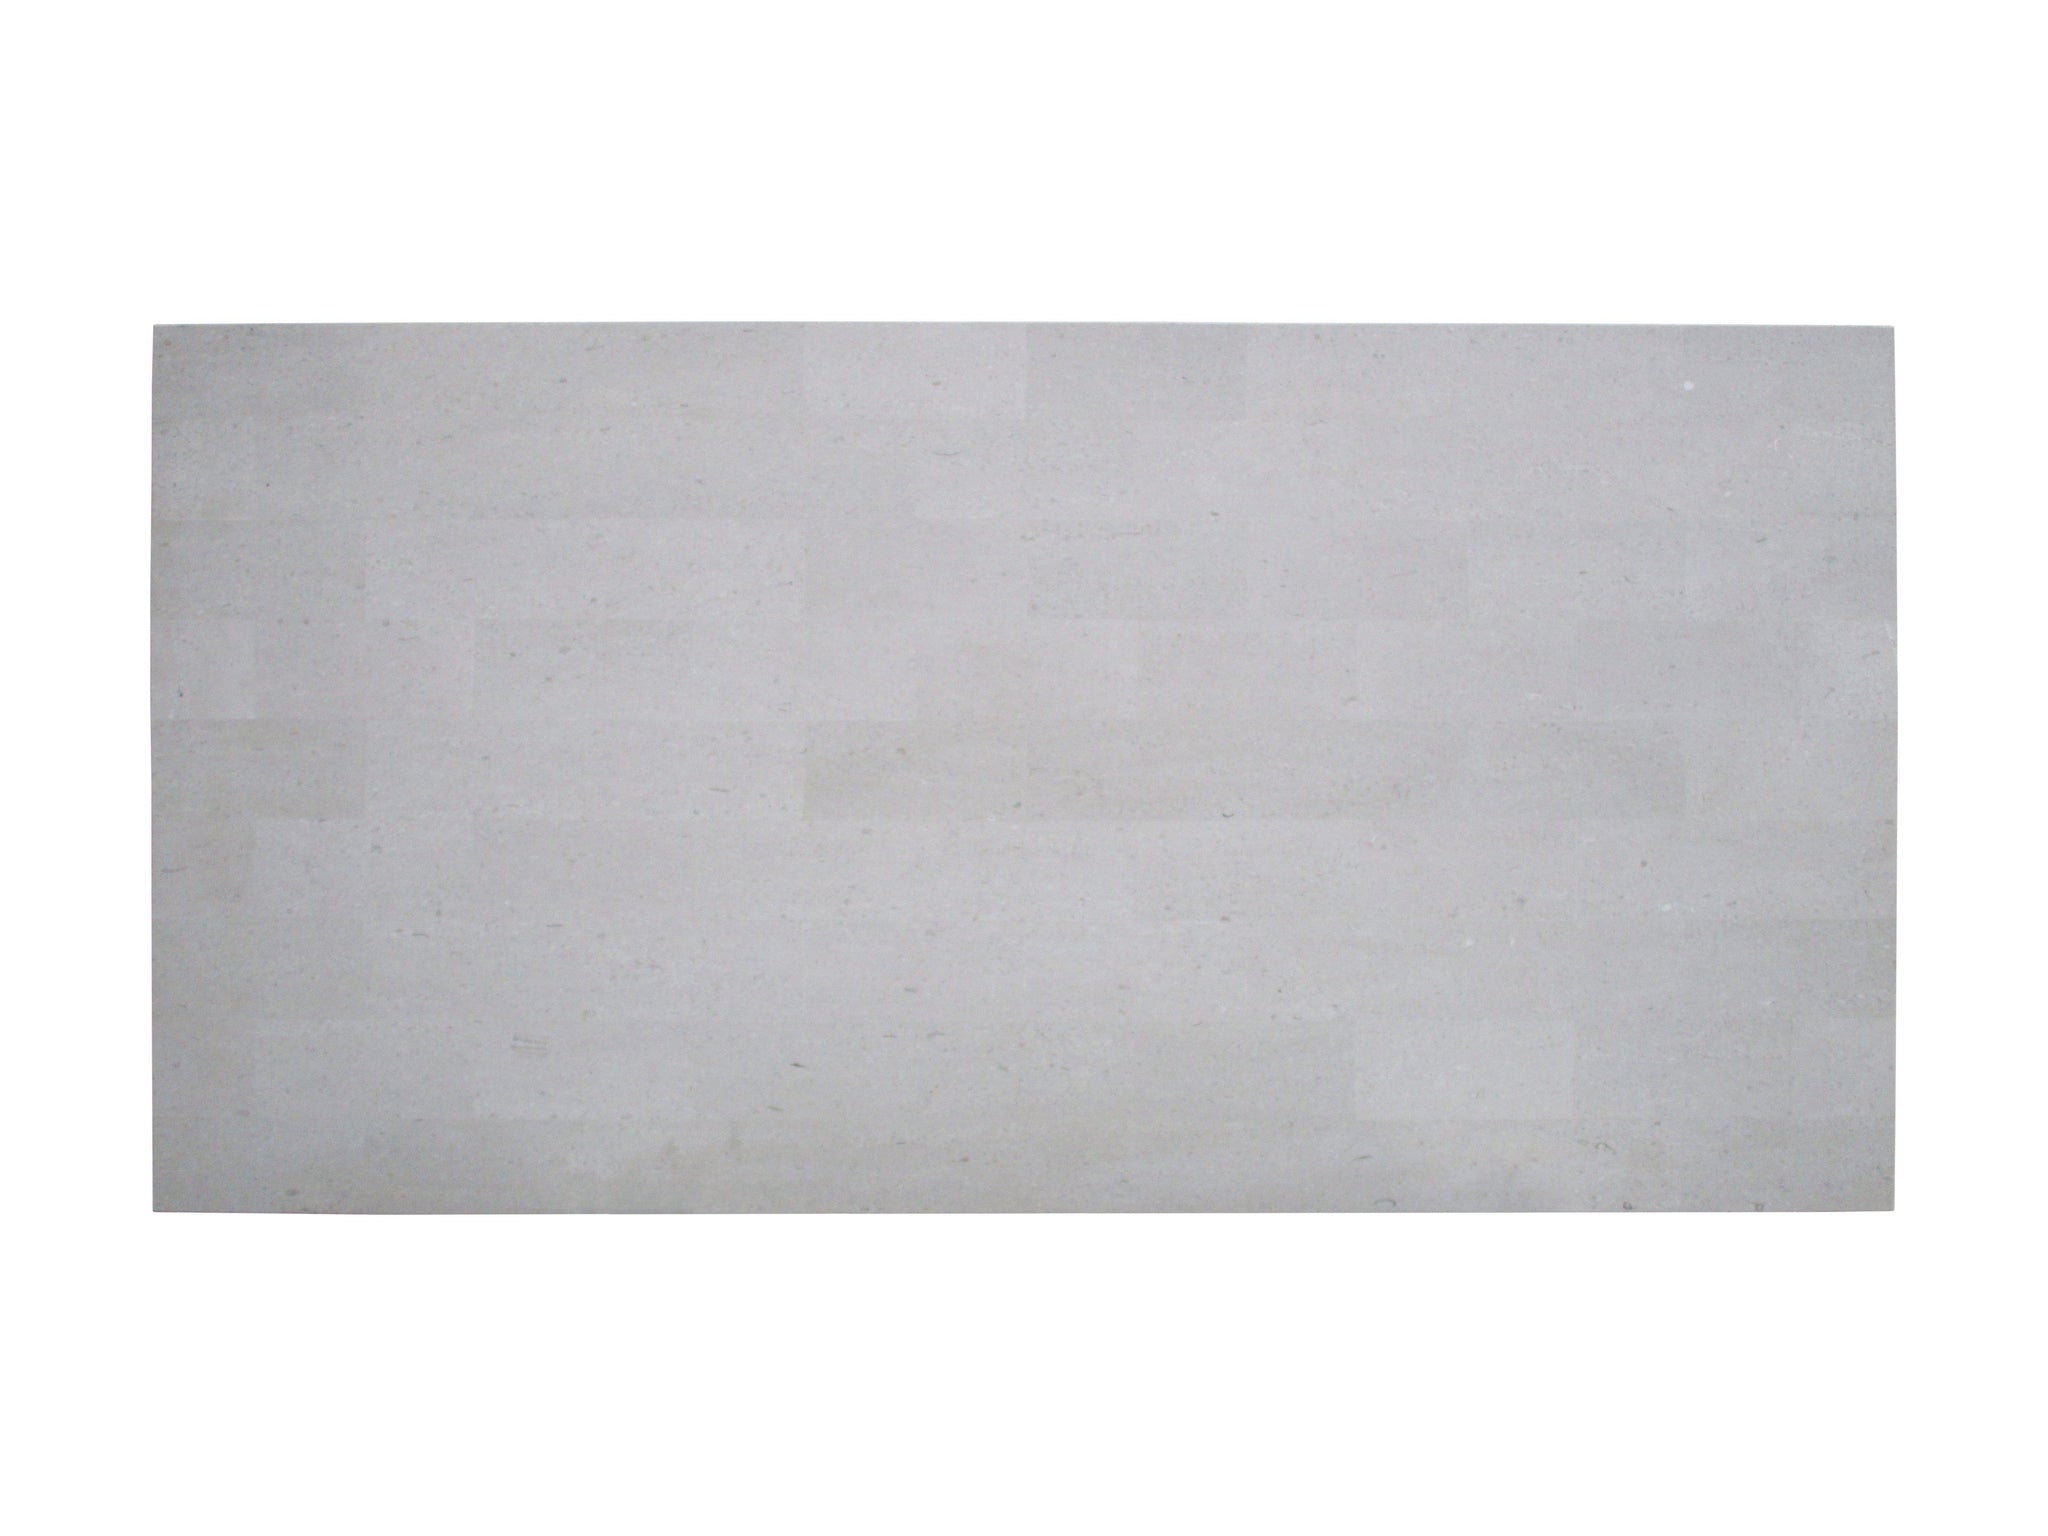 FurnitureOkay Stone Outdoor Dining Table (180x100cm) — Grey